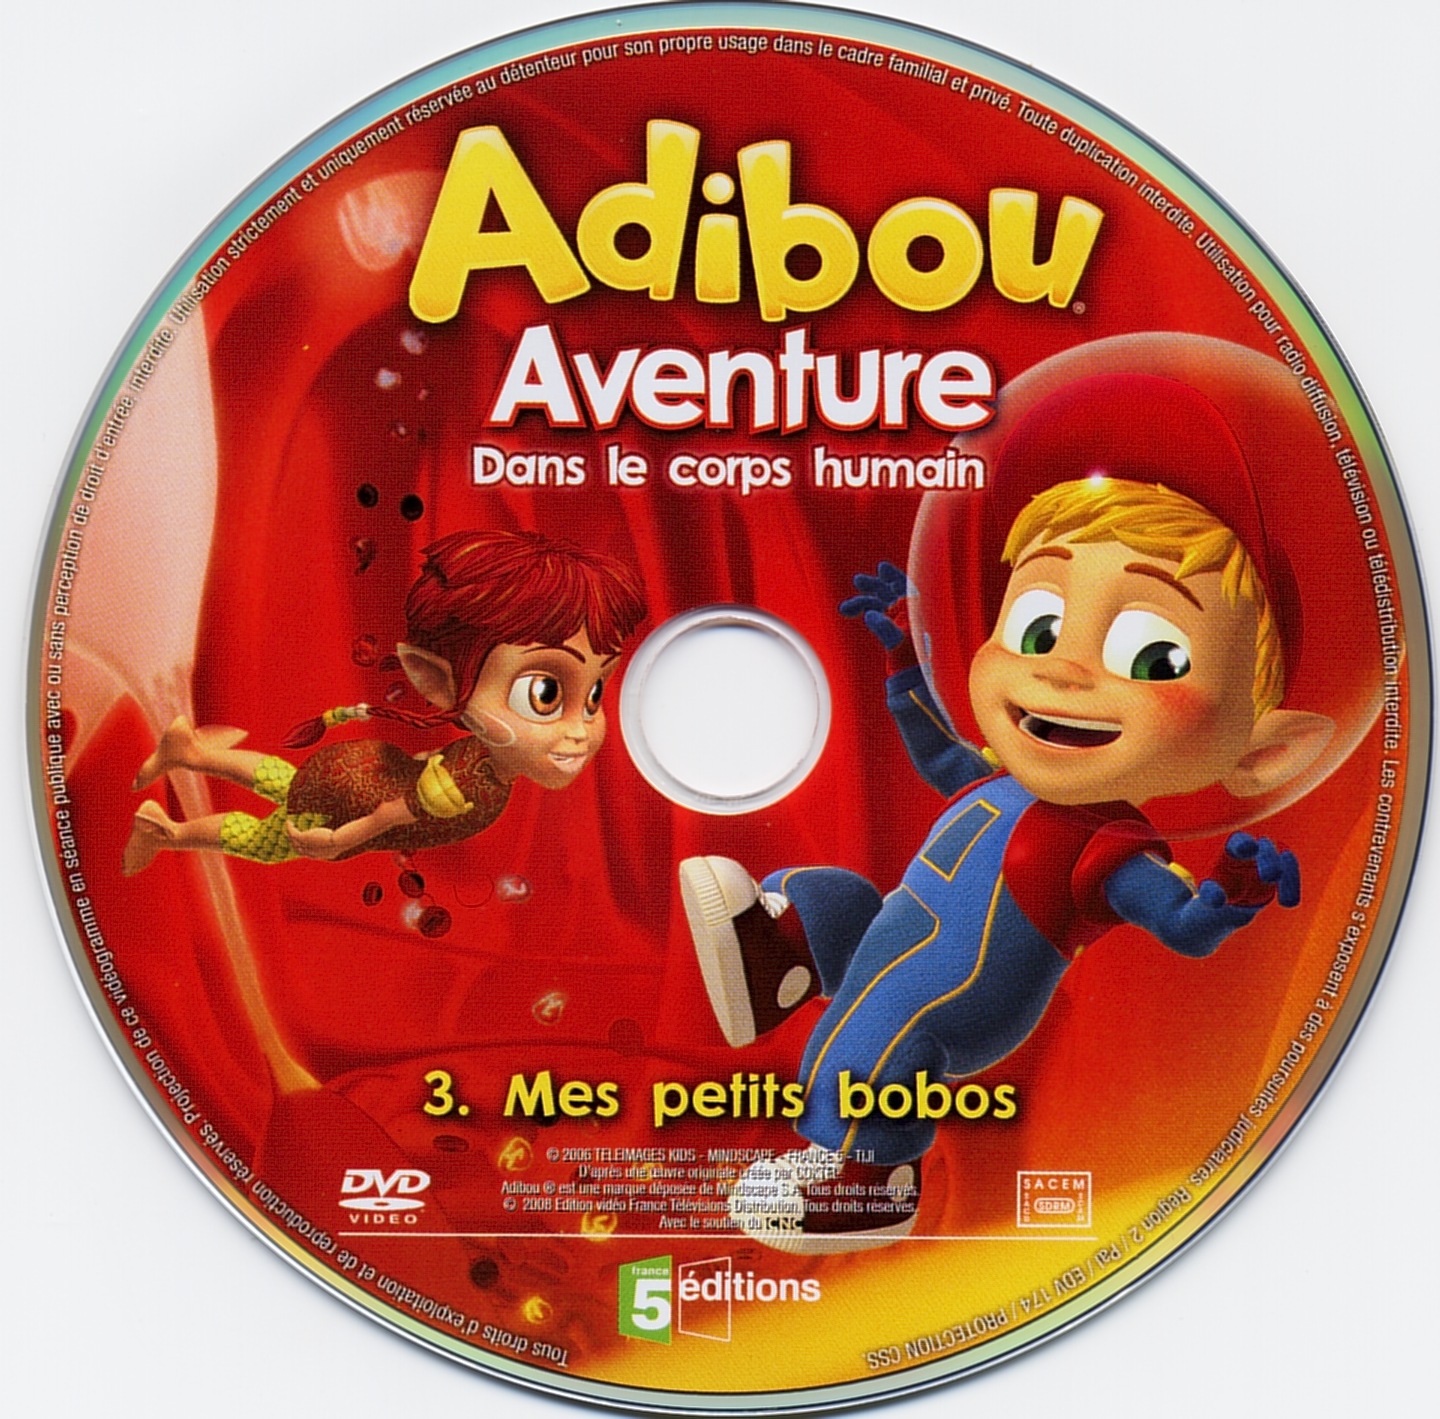 Adibou Aventure vol 3 Mes petits bobos